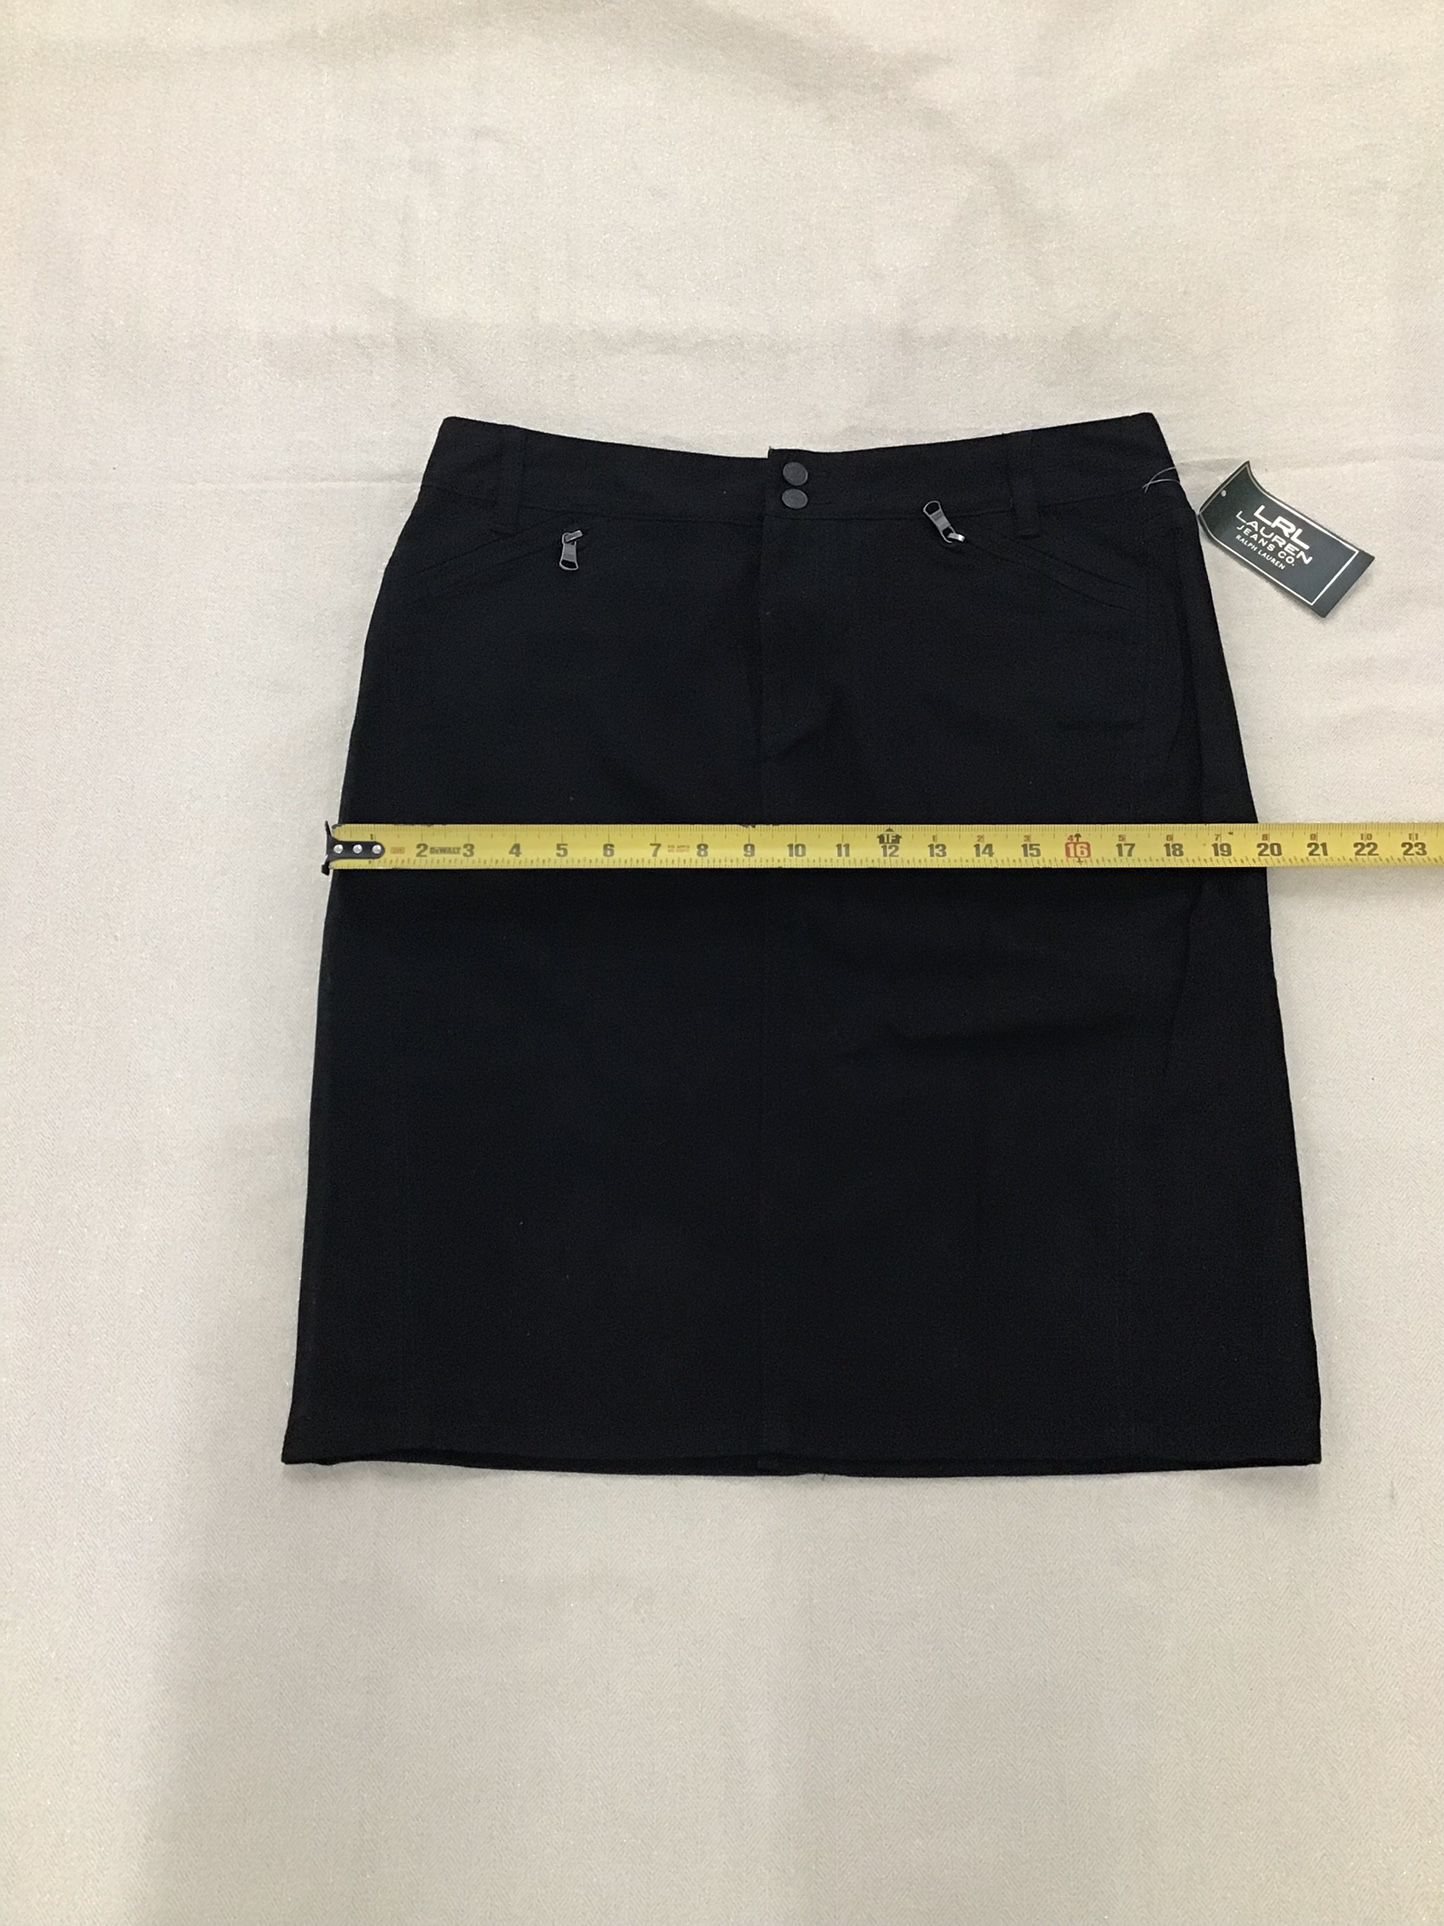 New With Tags RALPH LAUREN black denim skirt size 10